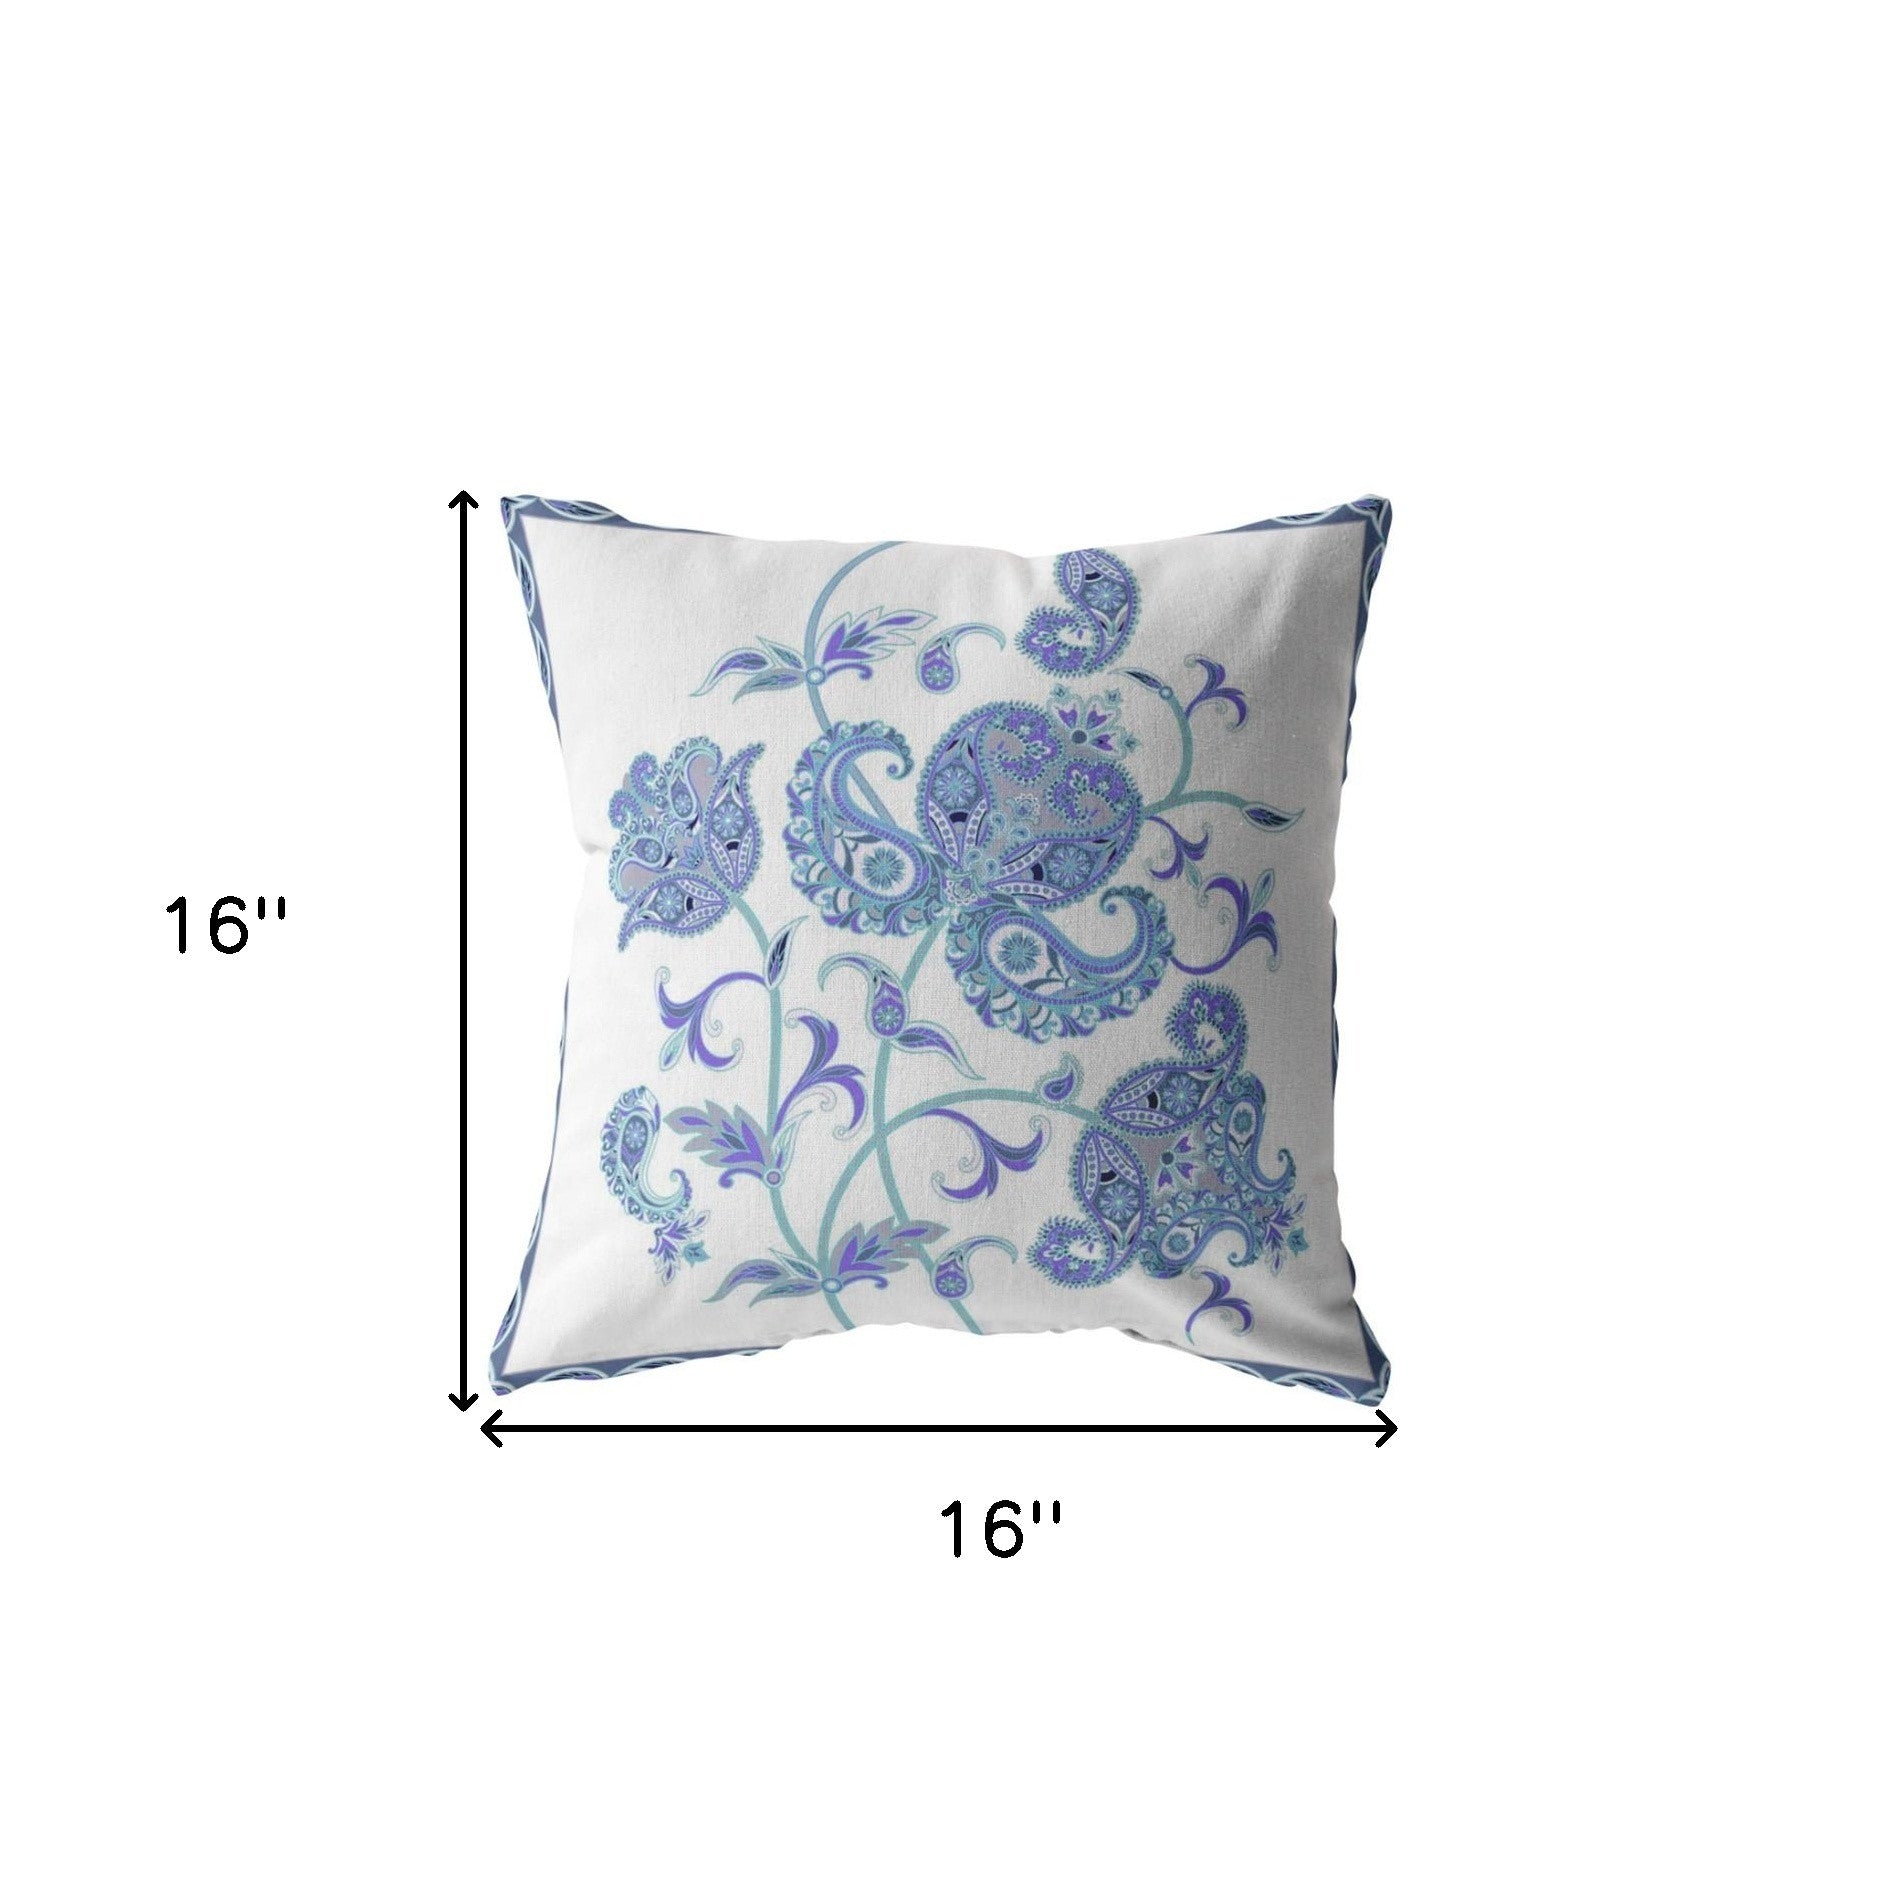 16” Blue White Wildflower Indoor Outdoor Zippered Throw Pillow